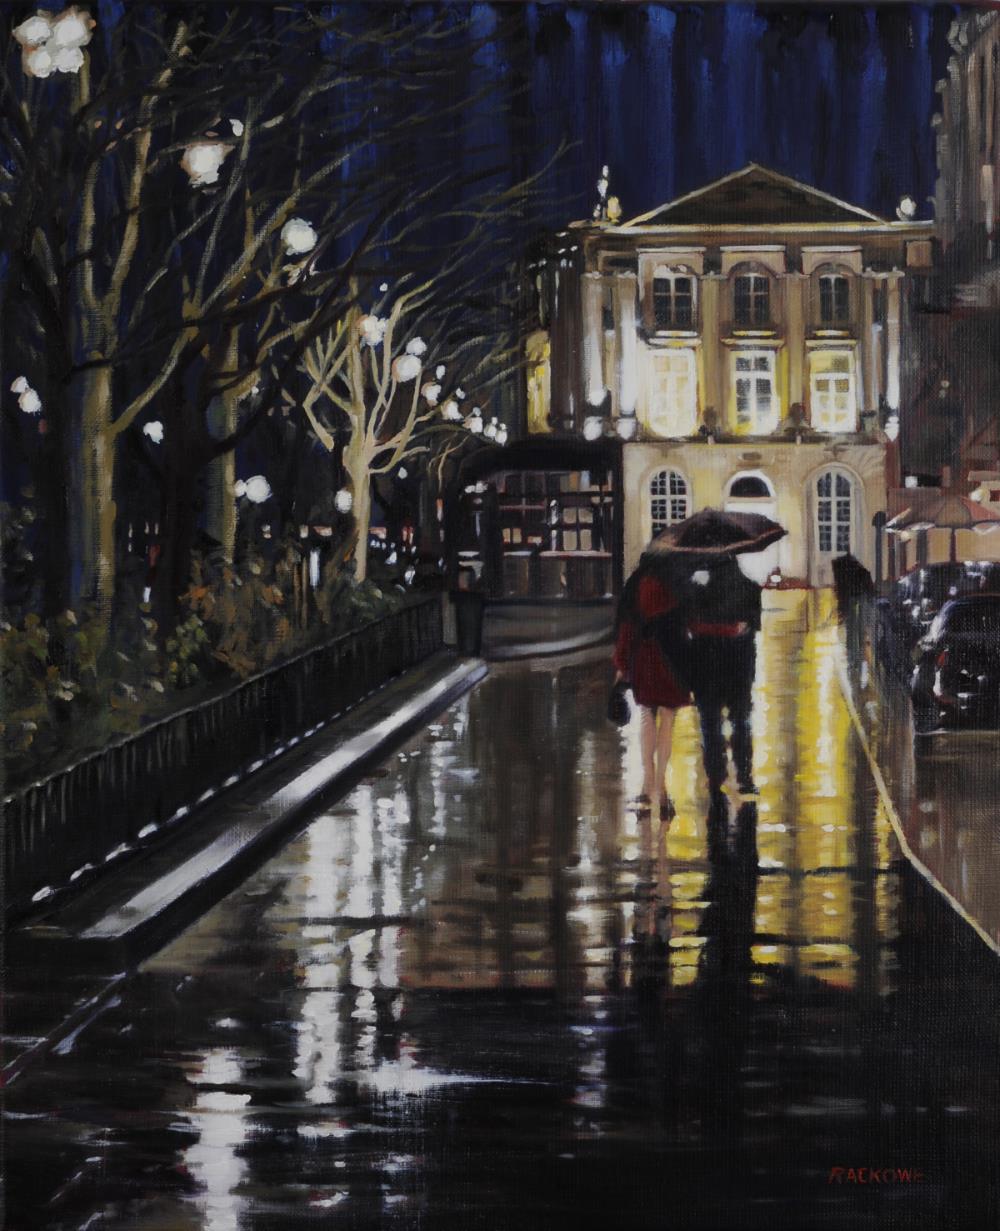 evening stroll - painting by Amanda Rackowe